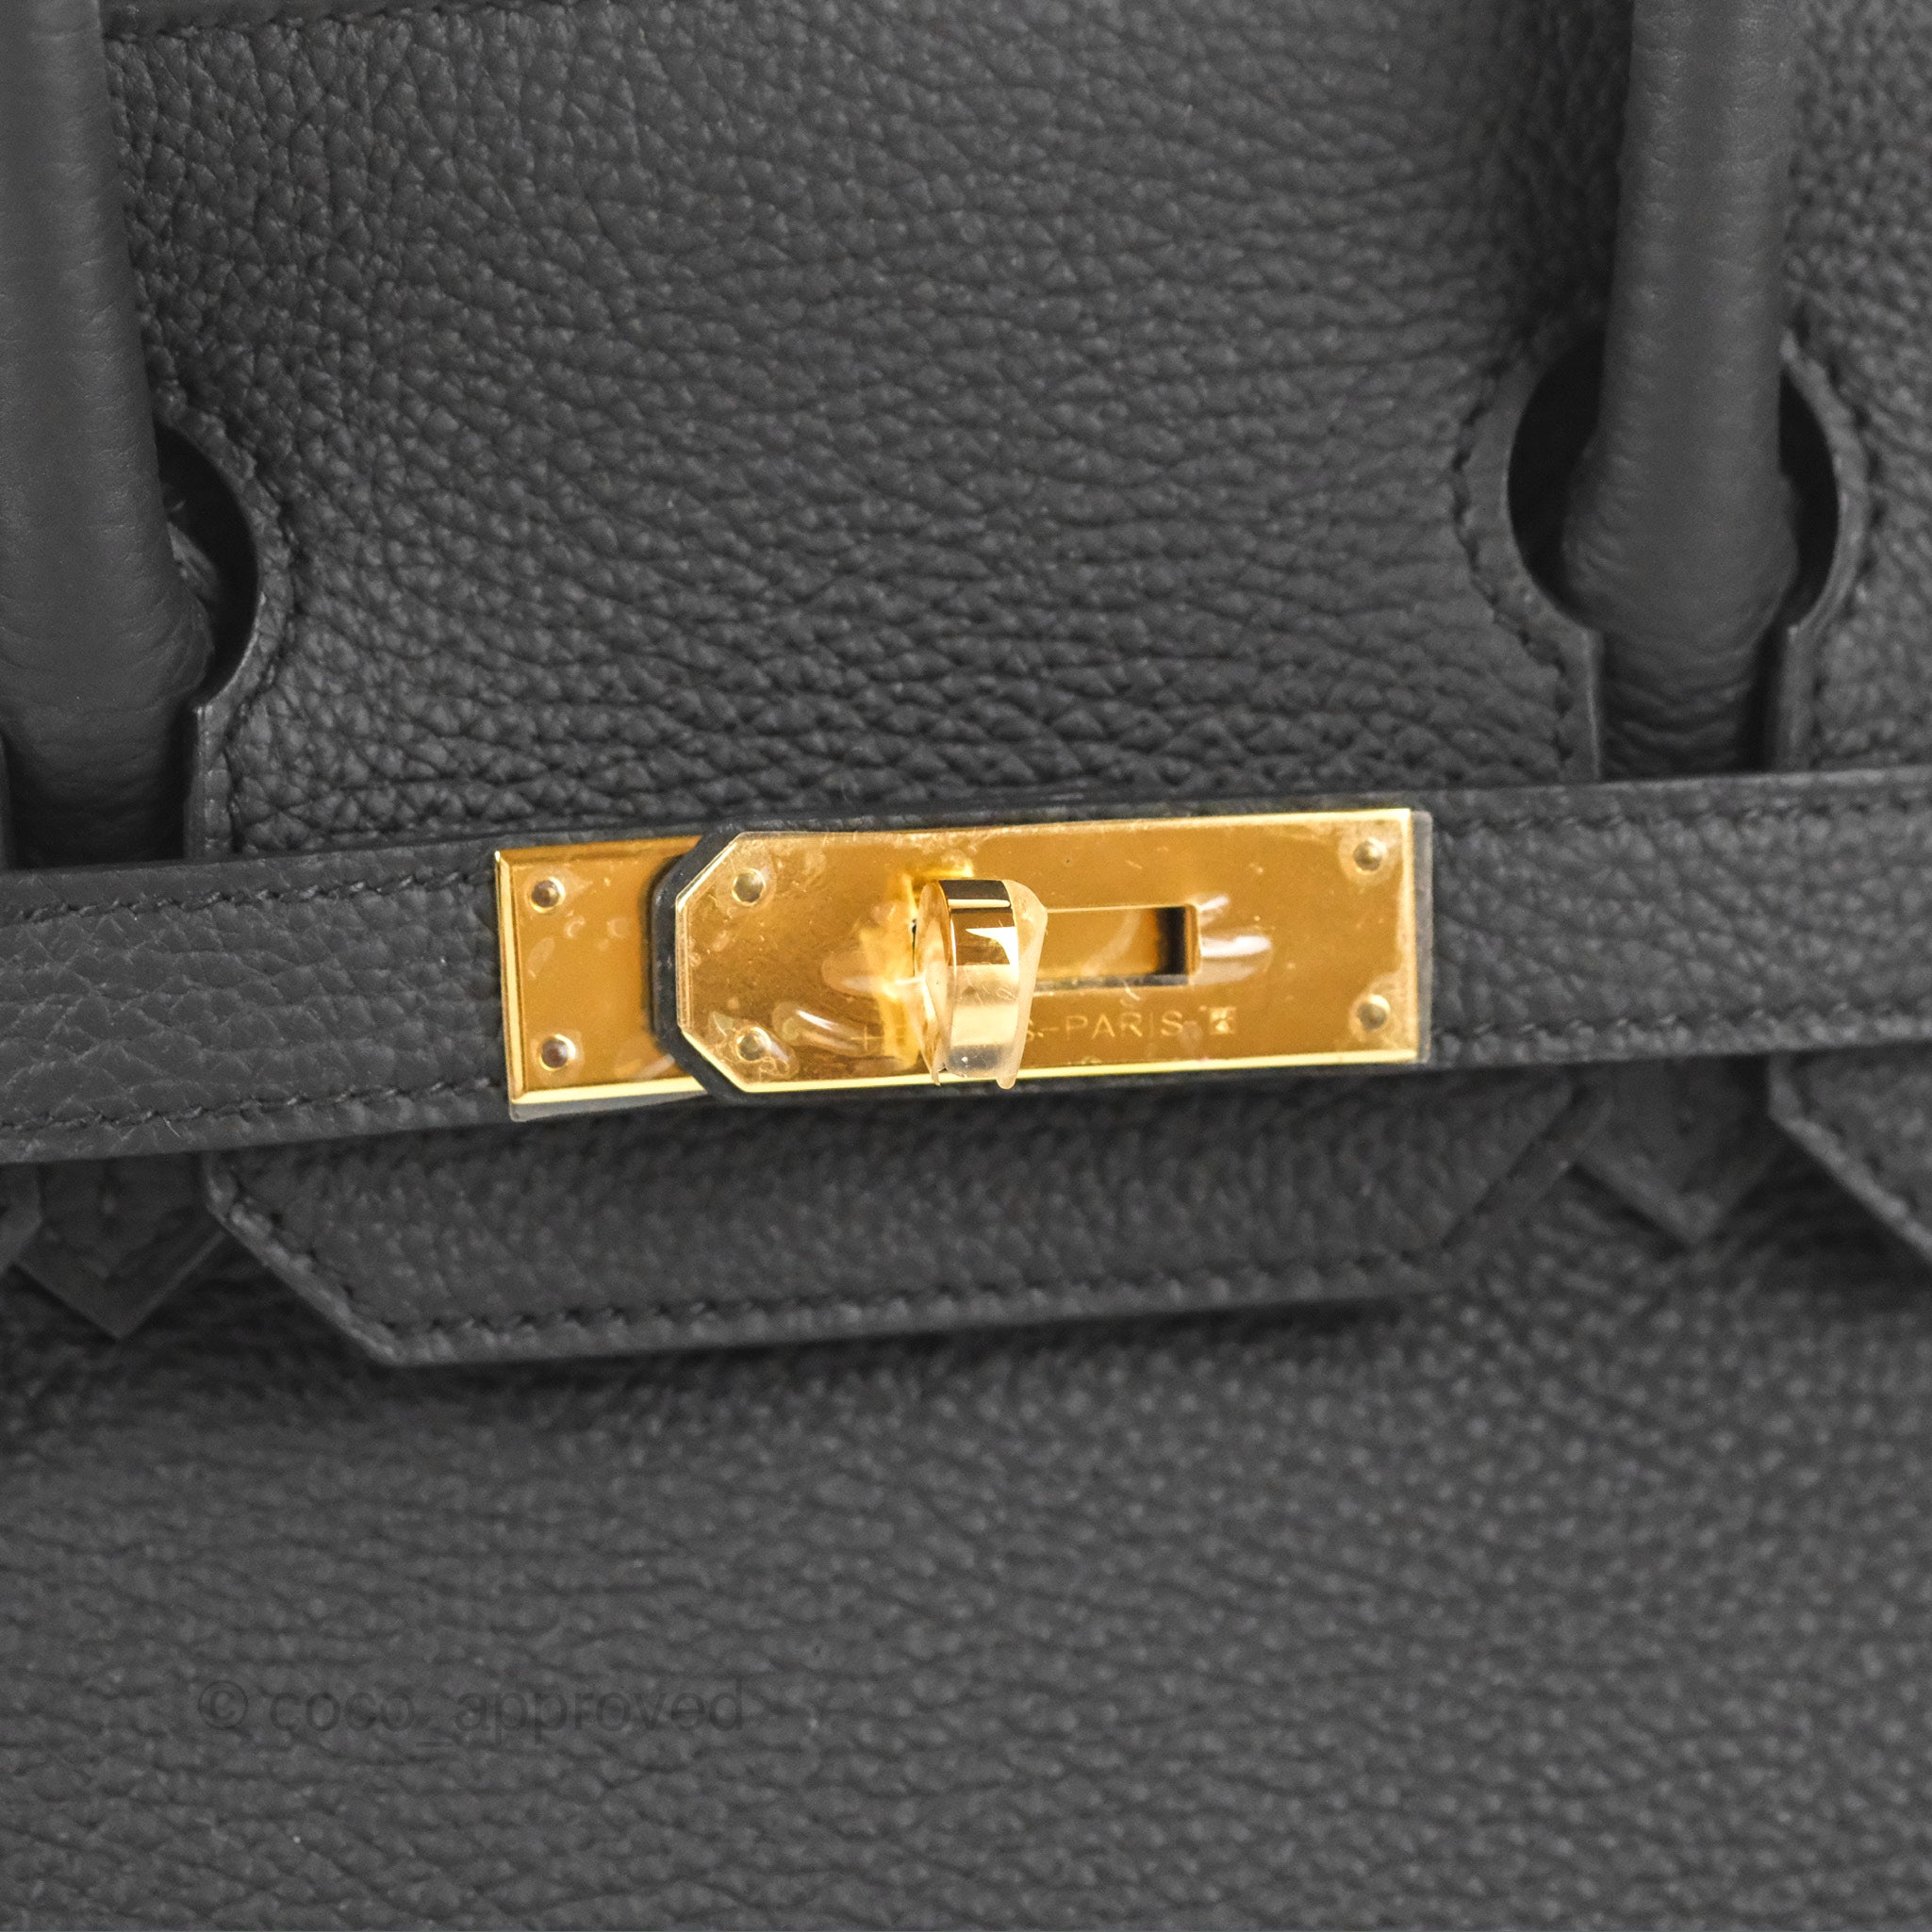 Hermès Birkin 30 Retourne Black Togo Gold Hardware – Coco Approved